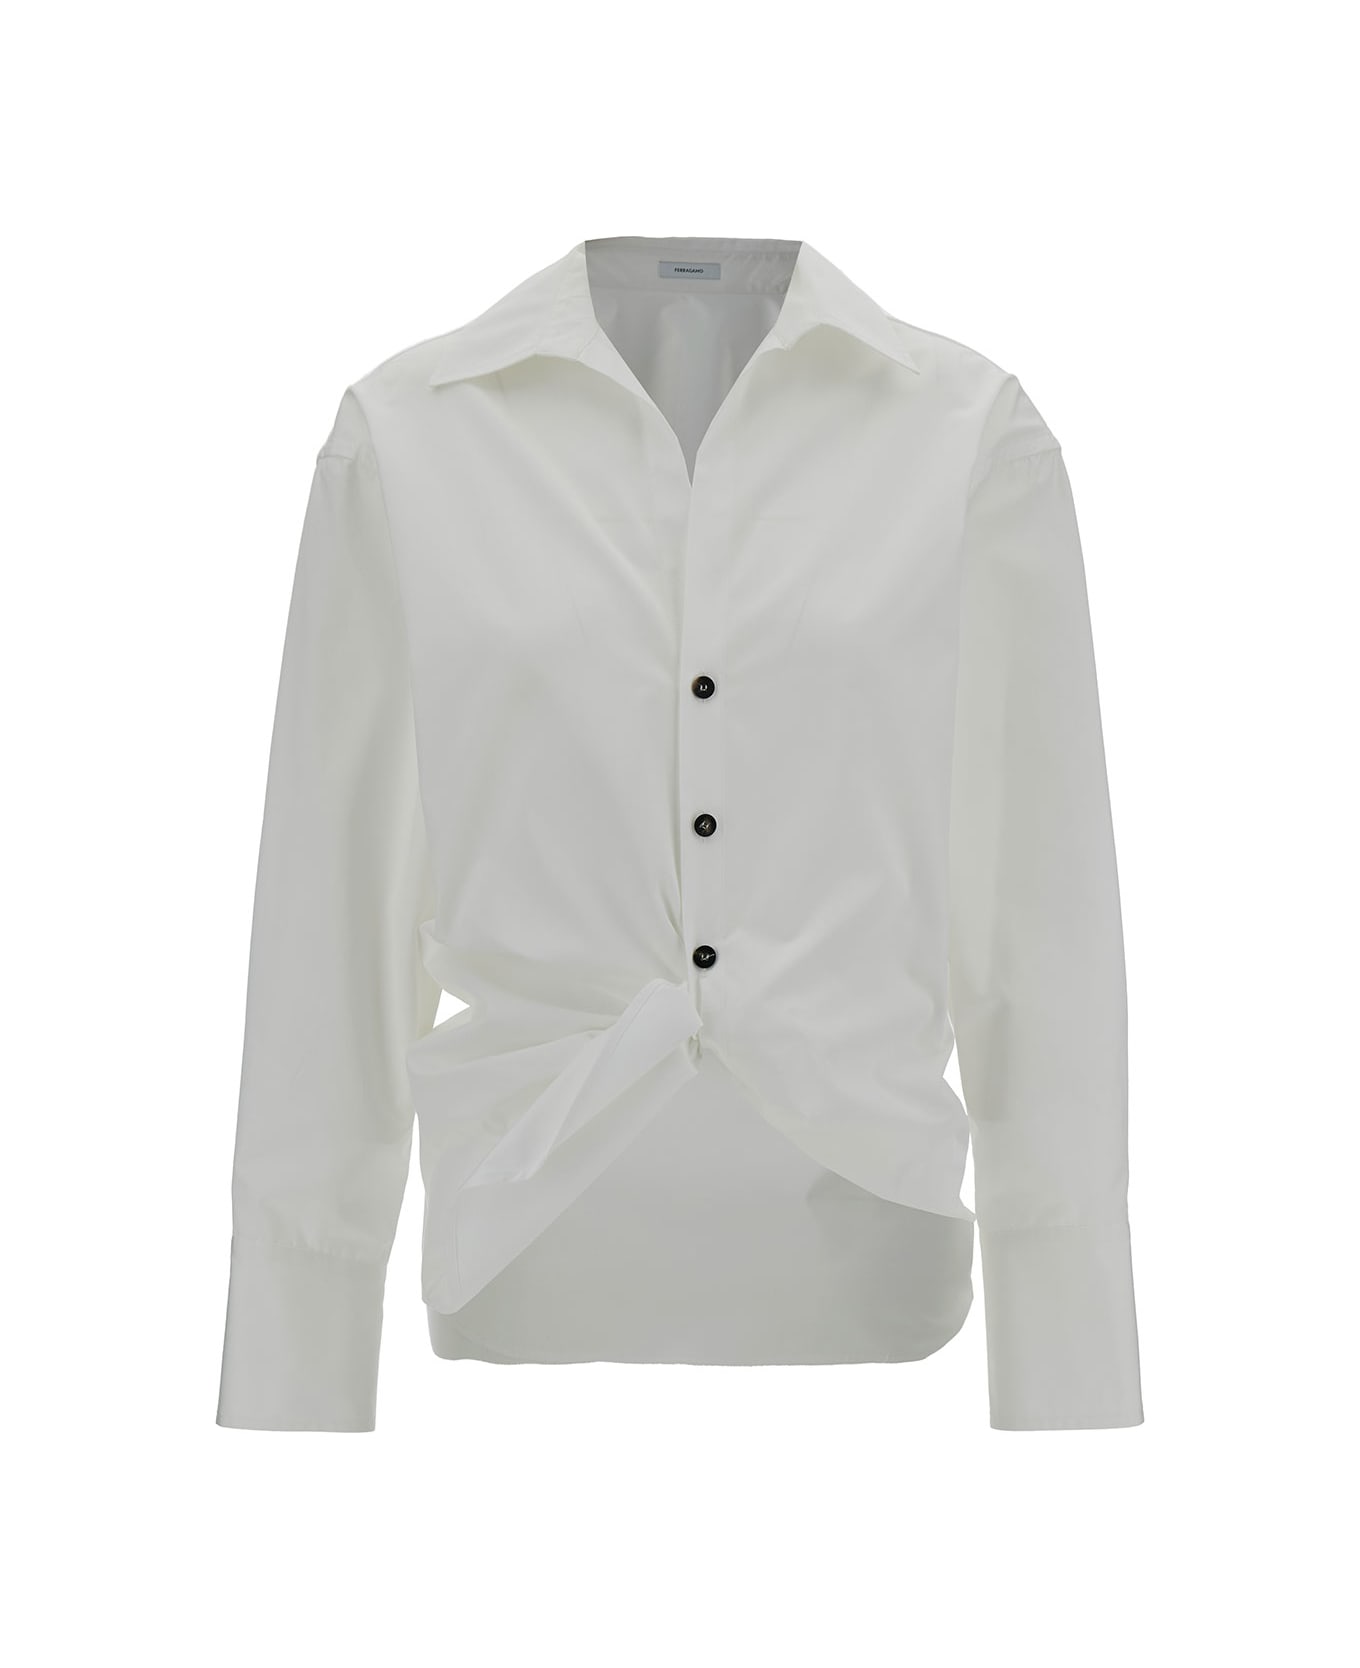 Ferragamo White Shirt With Knot Detail In Cotton Woman - White